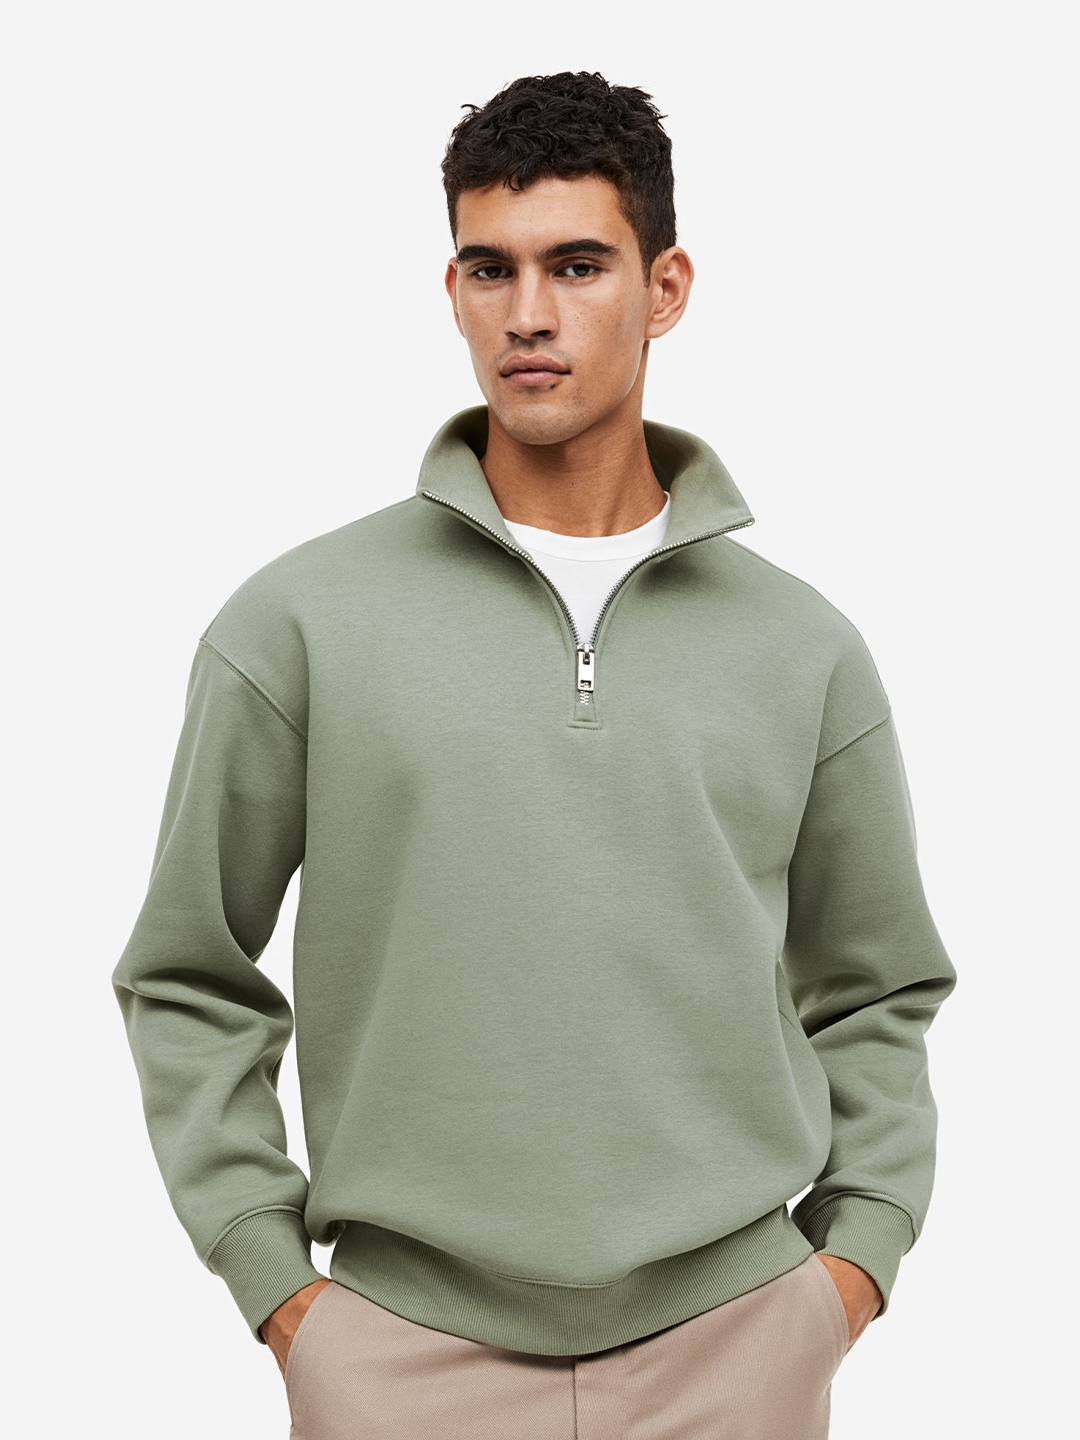 H&M Relaxed Fit Zip-Top Sweatshirt